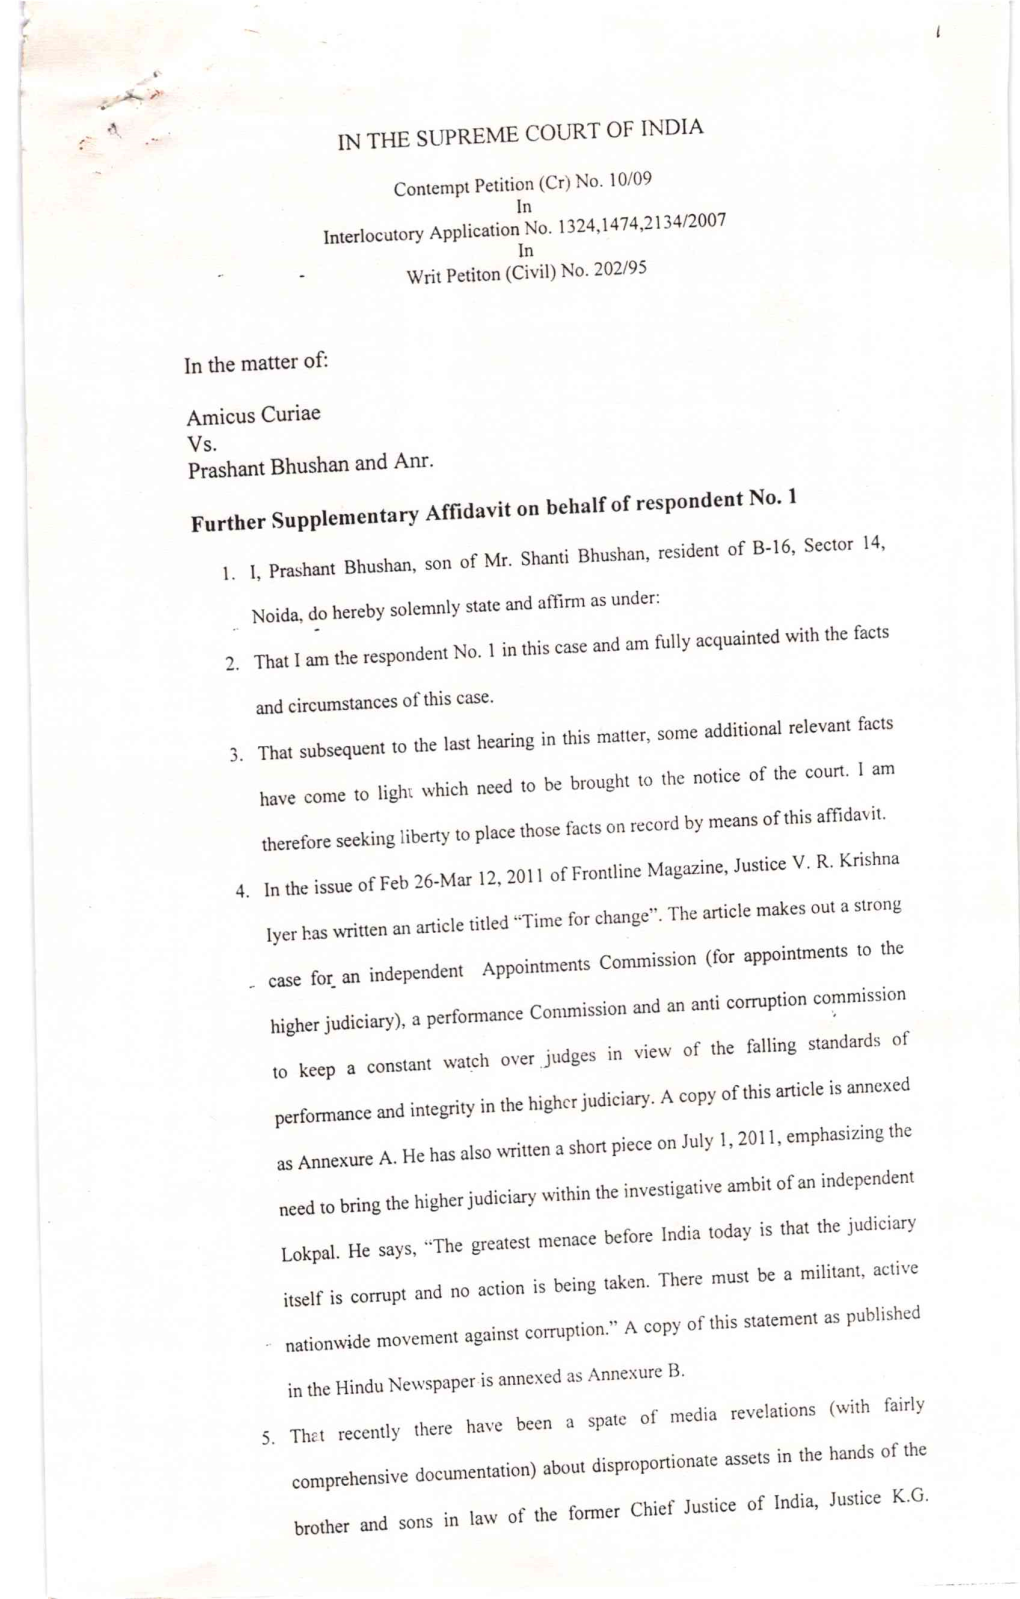 INDIA Xi..T Ant Sl,Urt an and Aff' Affidavit on Behalf of Respondent